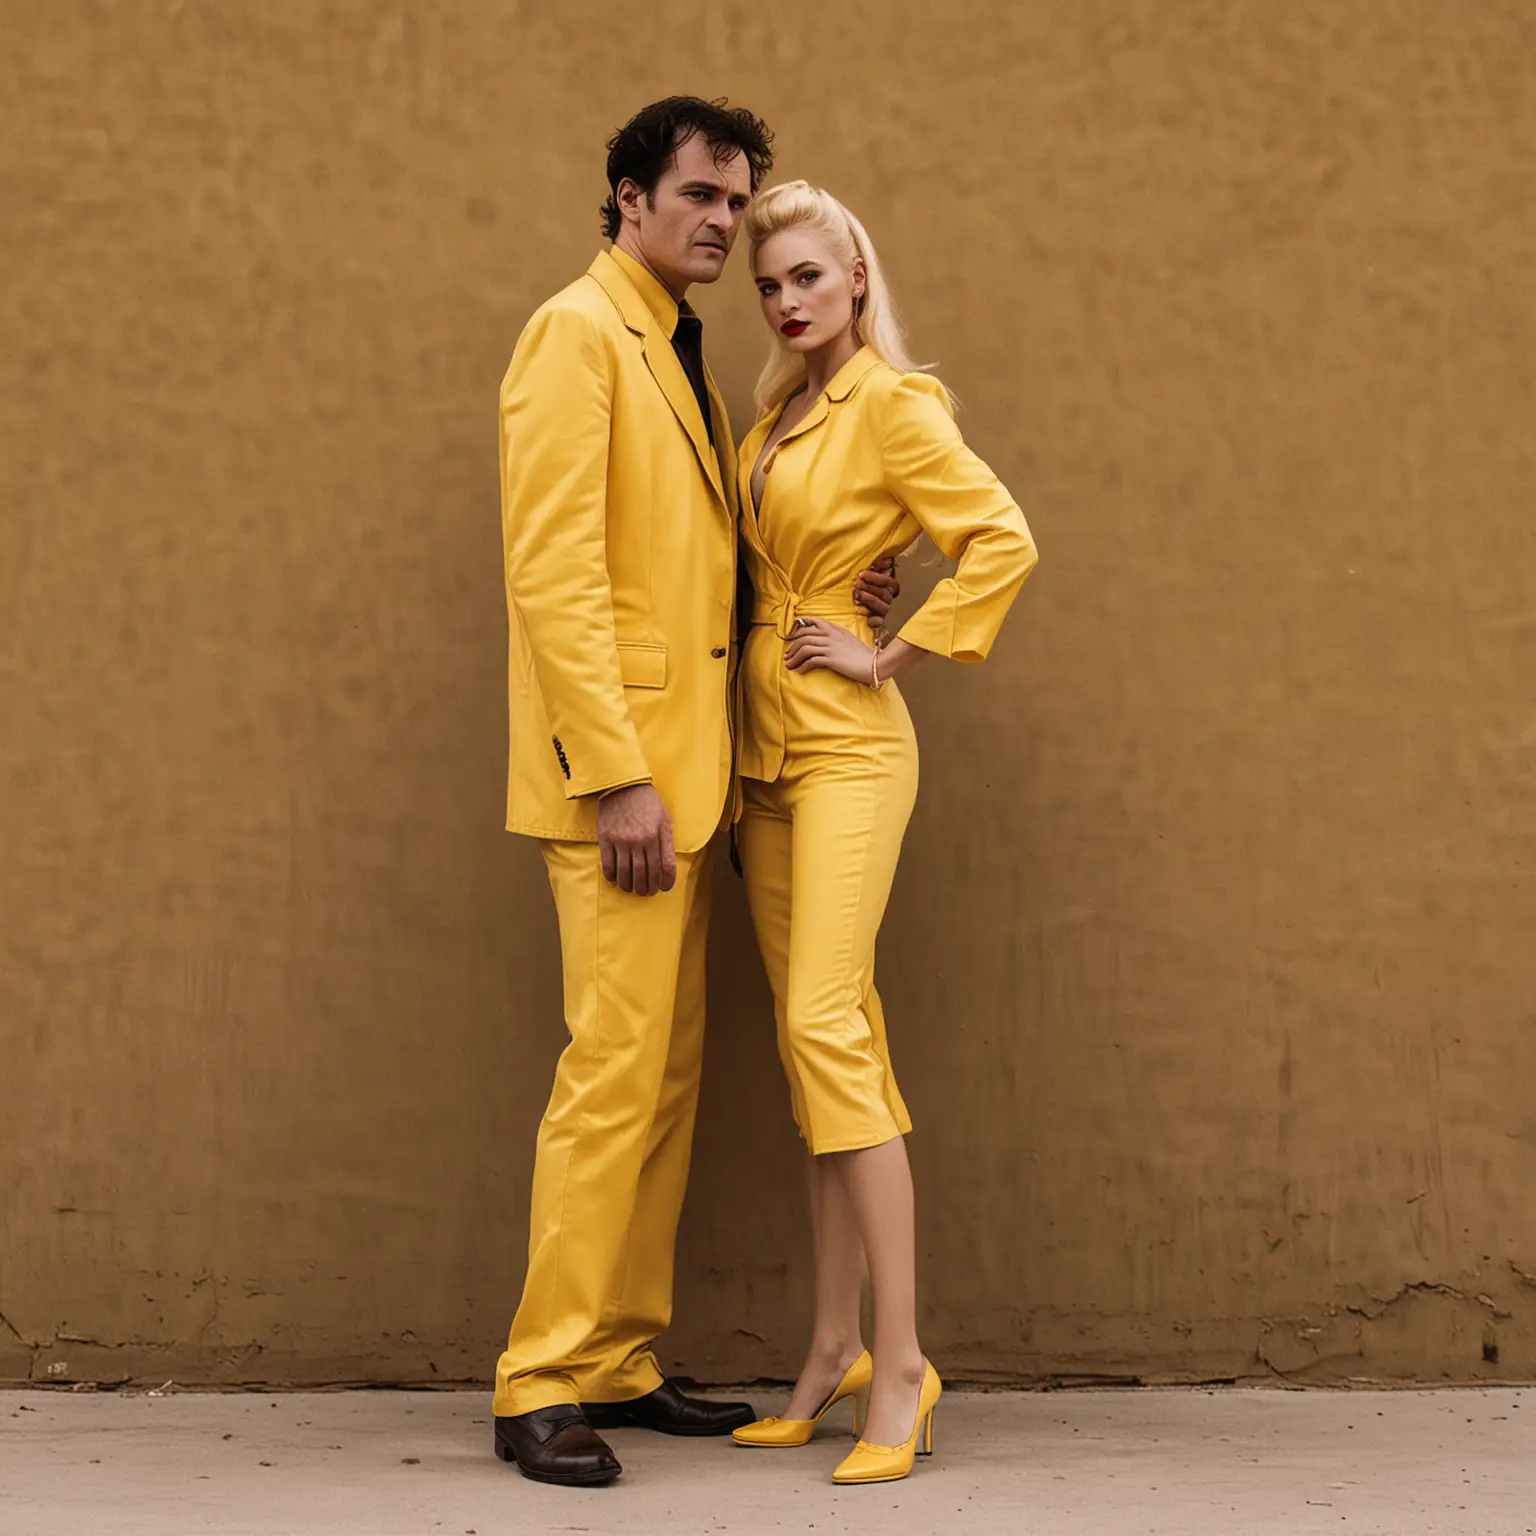 Couple in Stylish Yellow Tarantino Inspired Fashion Portrait